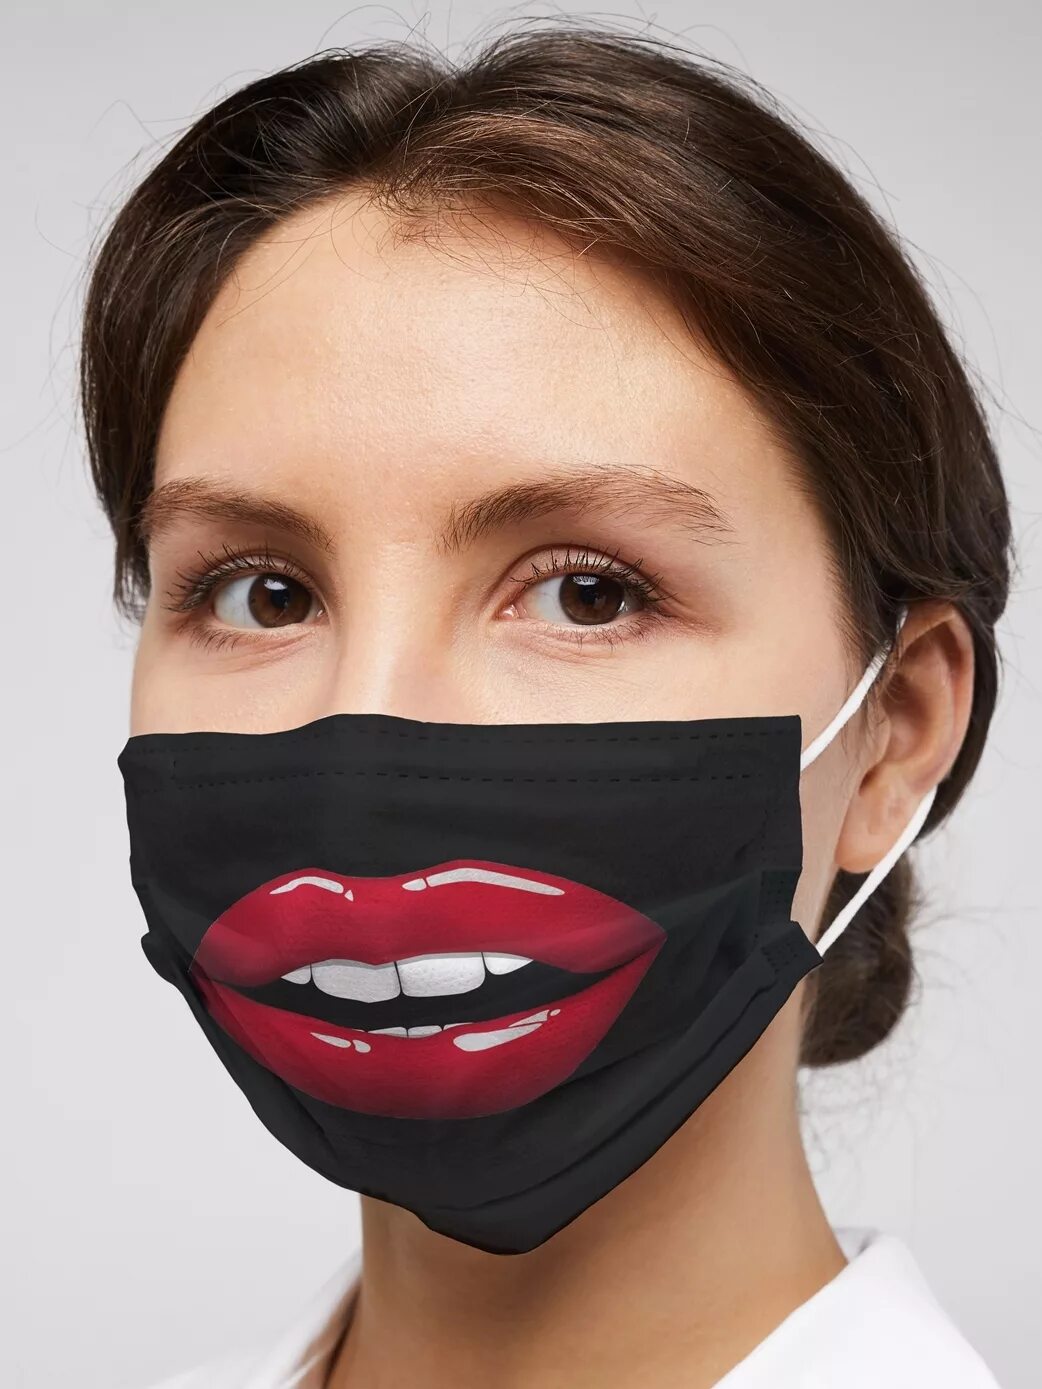 Маска для лица. Креативные маски для лица. Стильная маска. Защитная маска для лица. Самая популярная маска